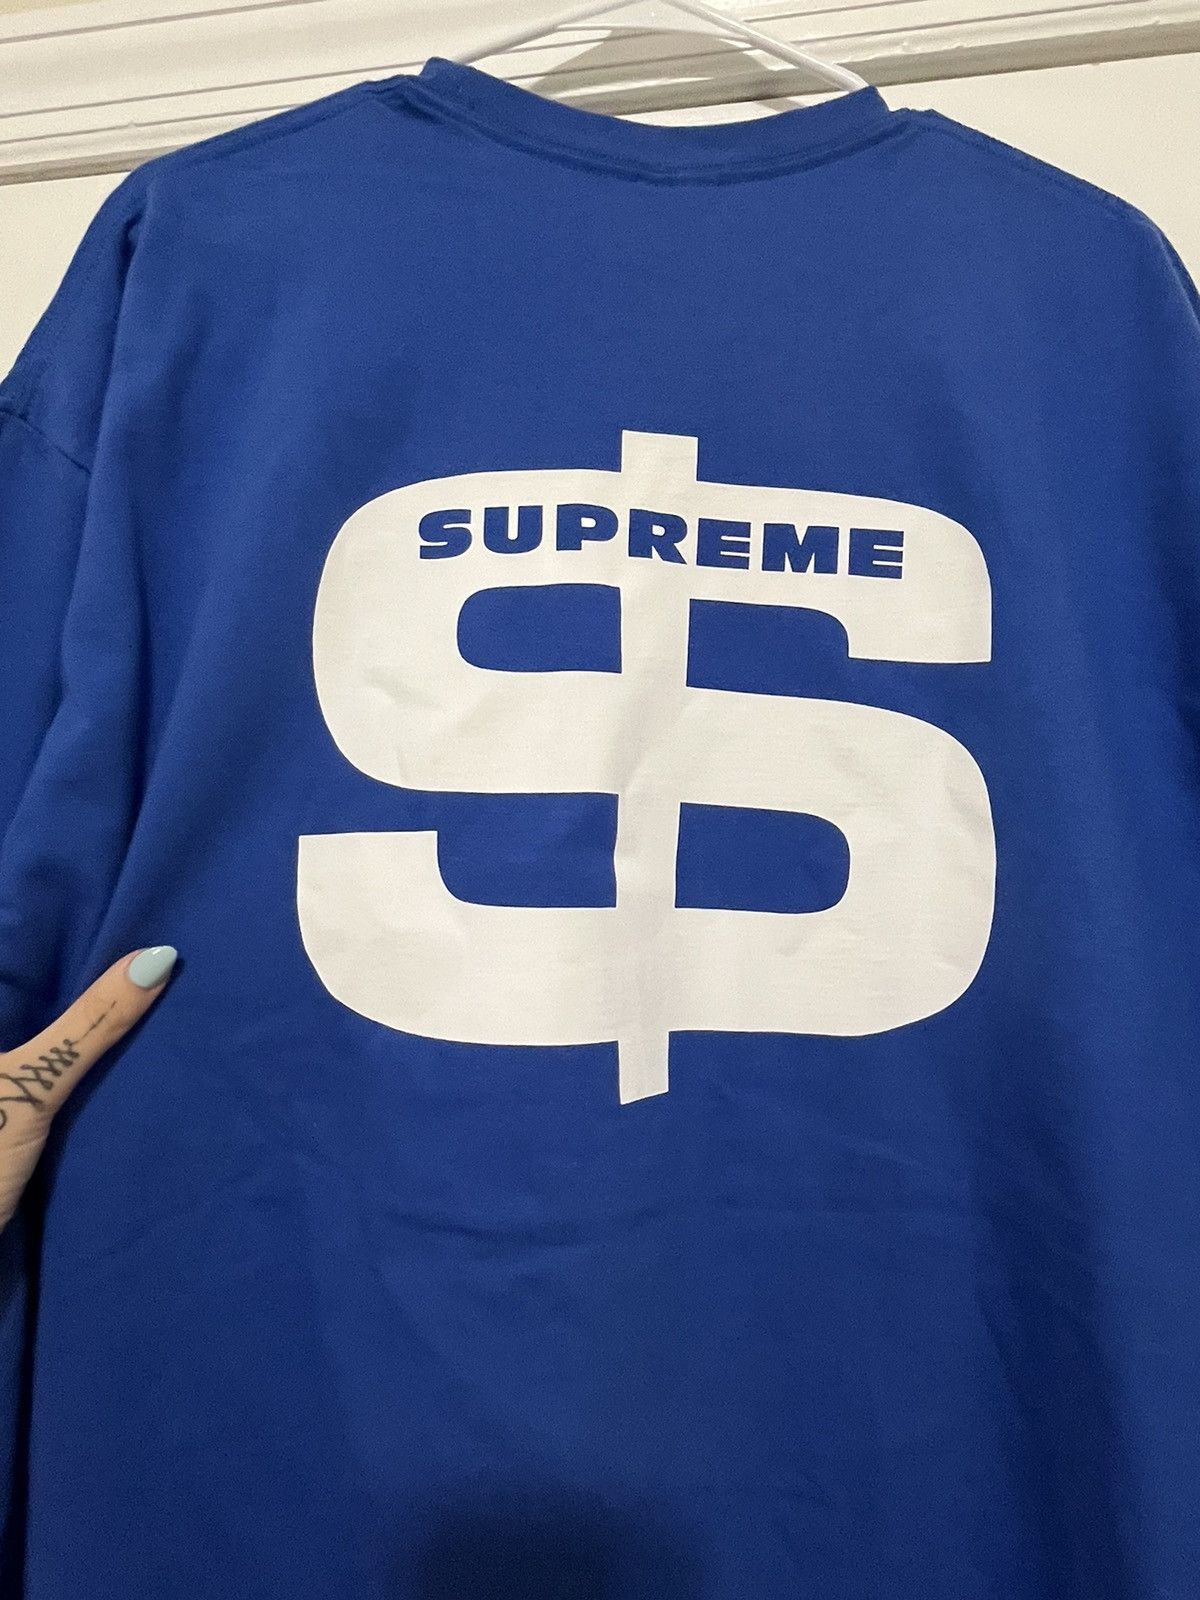 Supreme Supreme “Don't Fuck Around” tee | Grailed